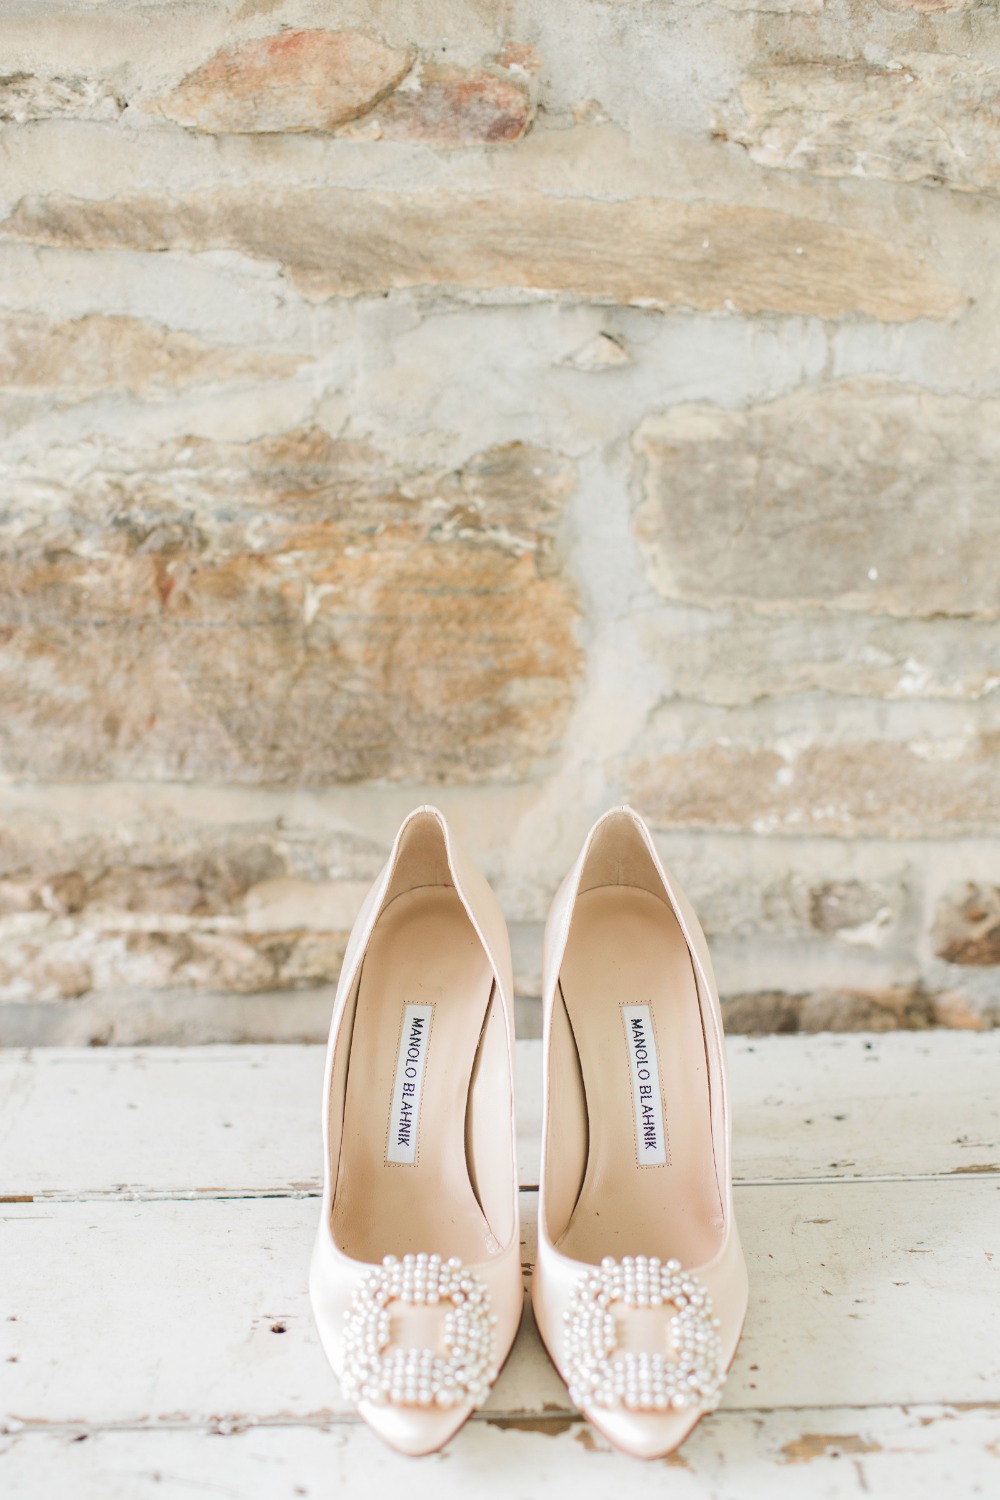 Wedding heels with pearl details